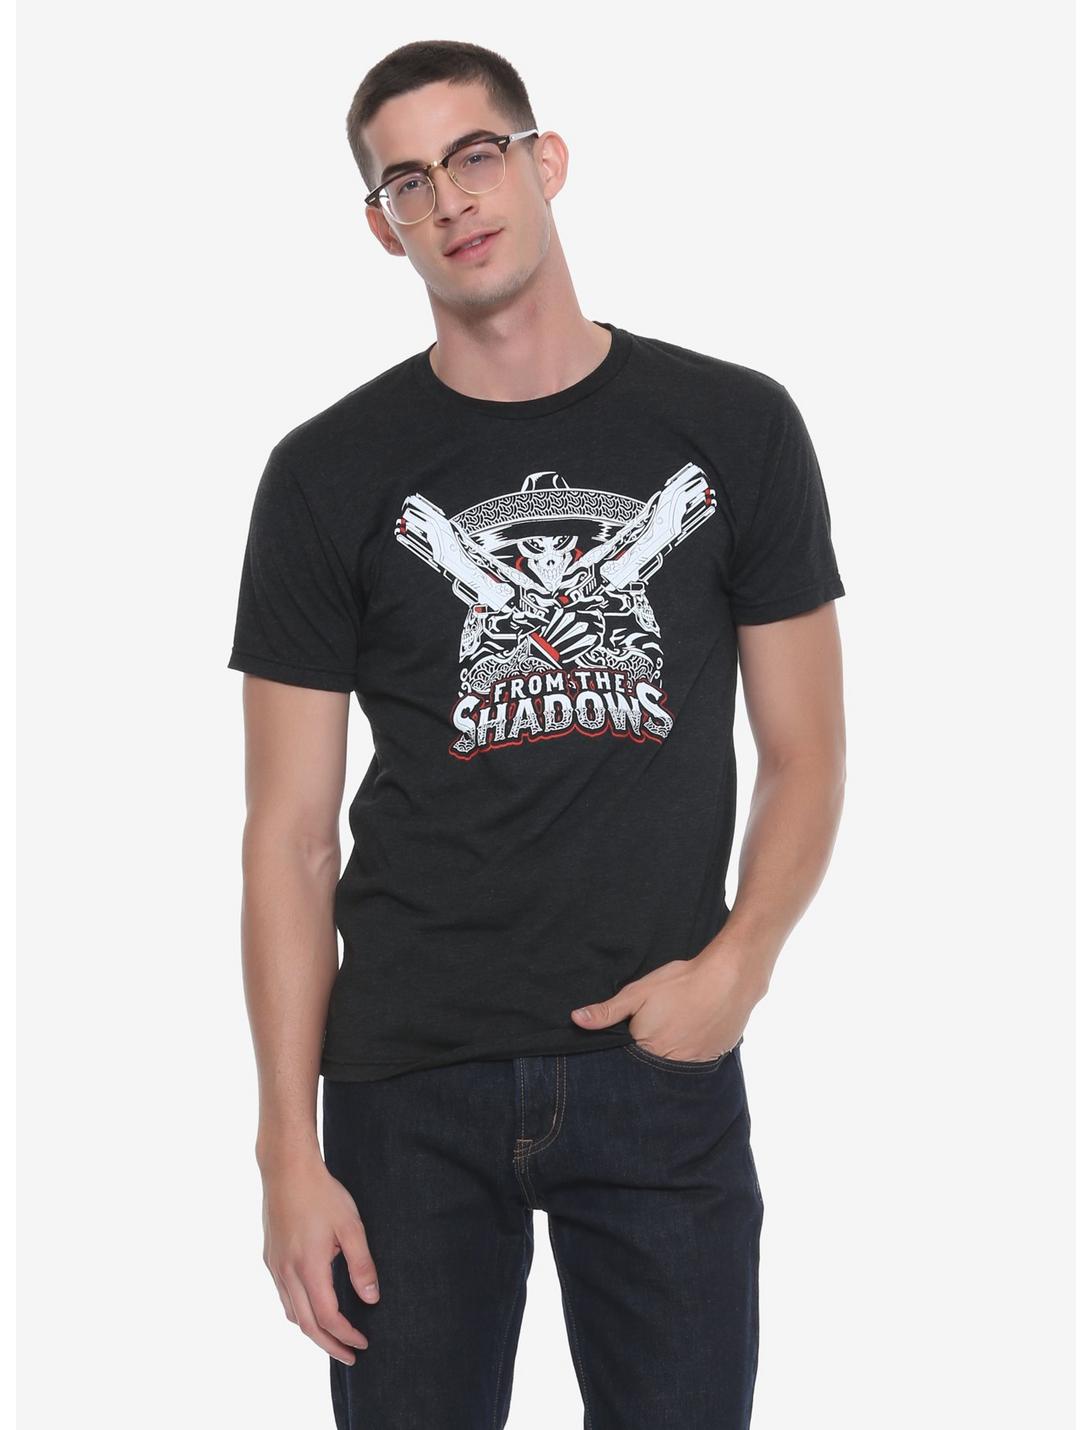 Overwatch Reaper Shadows T-Shirt, BLACK, hi-res